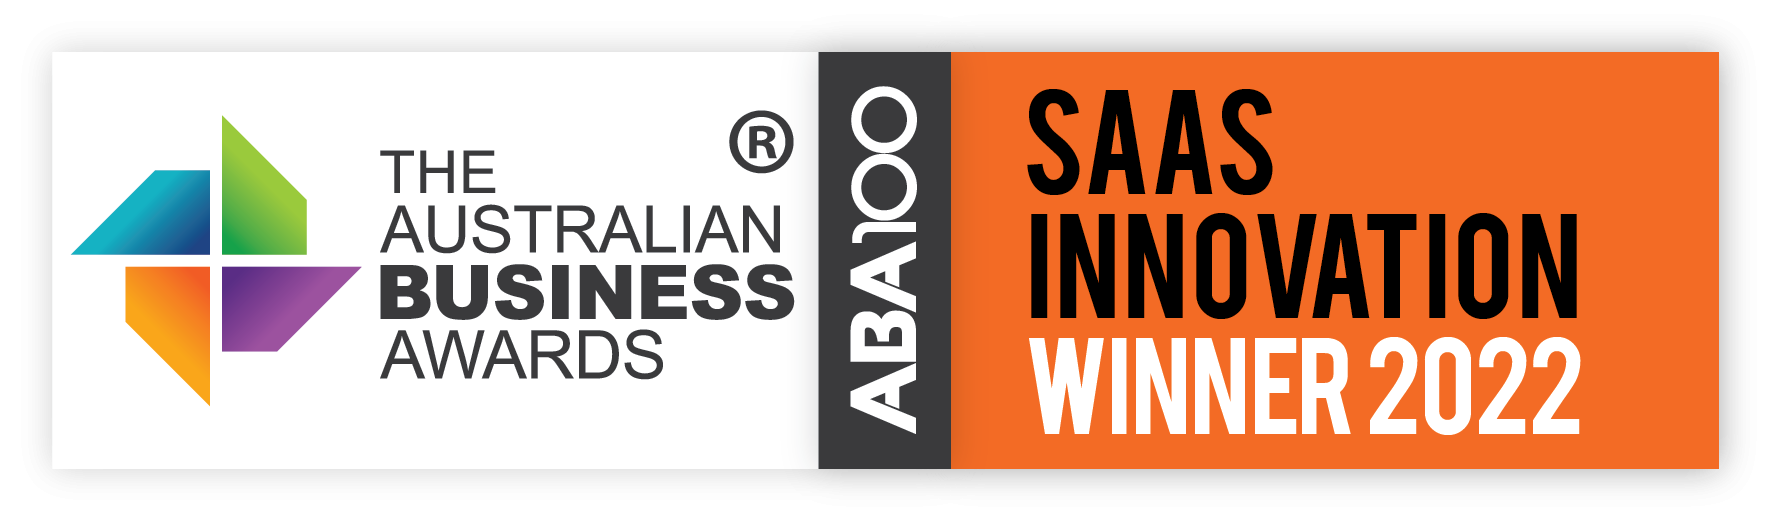 The Australian Business Awards 2022